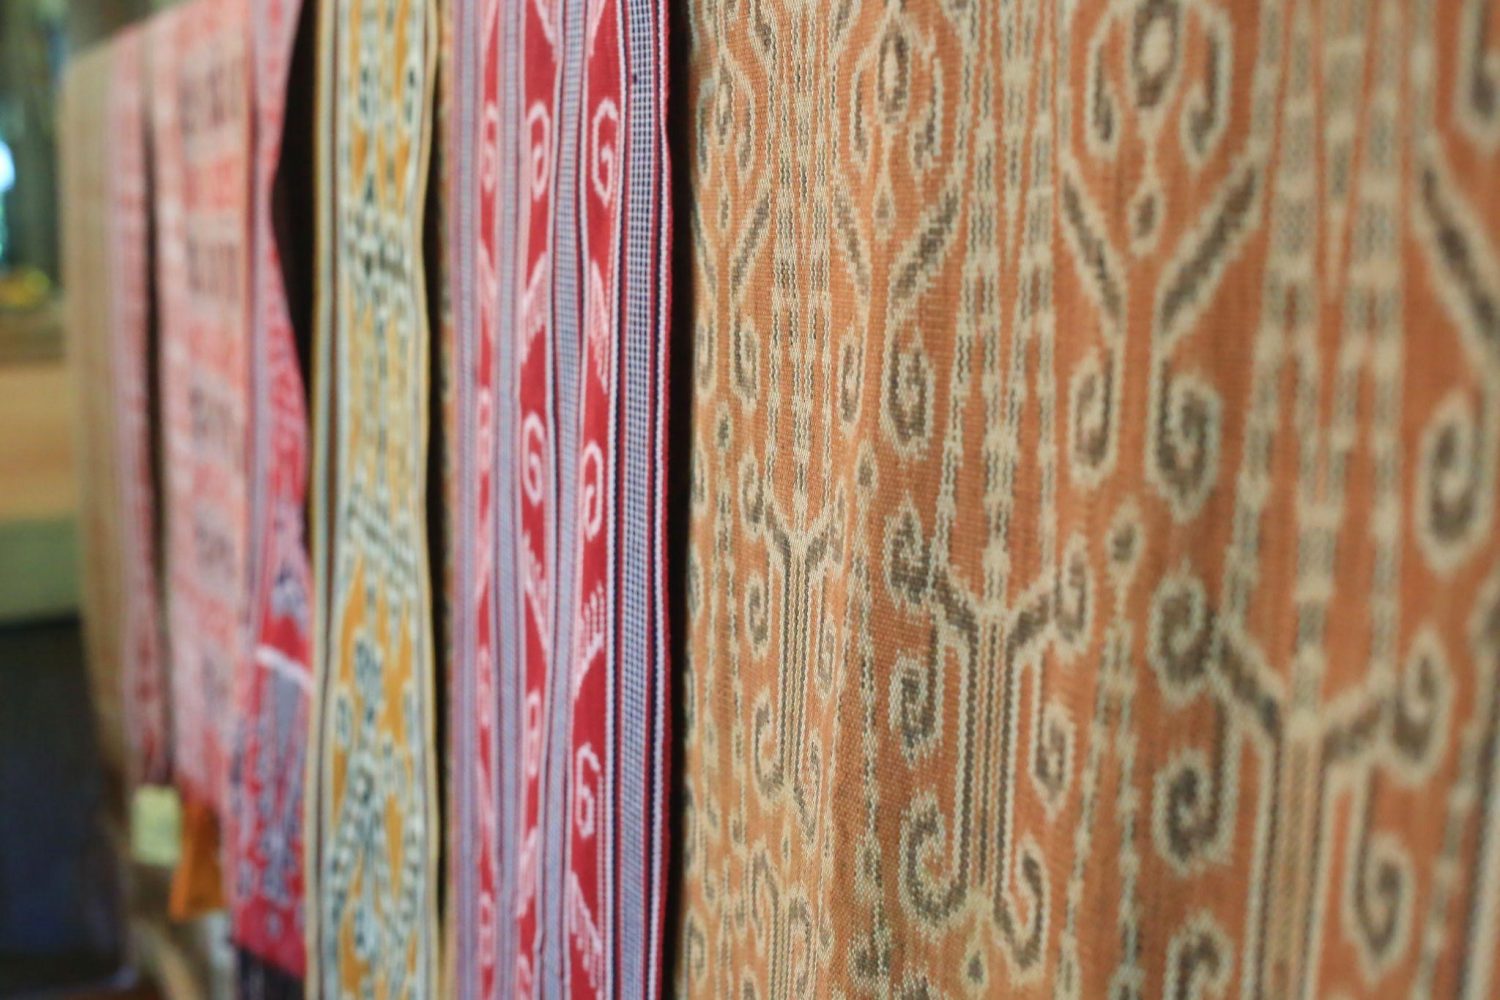 The intricate pua kumbu patterns and designs sprawled out artistically.